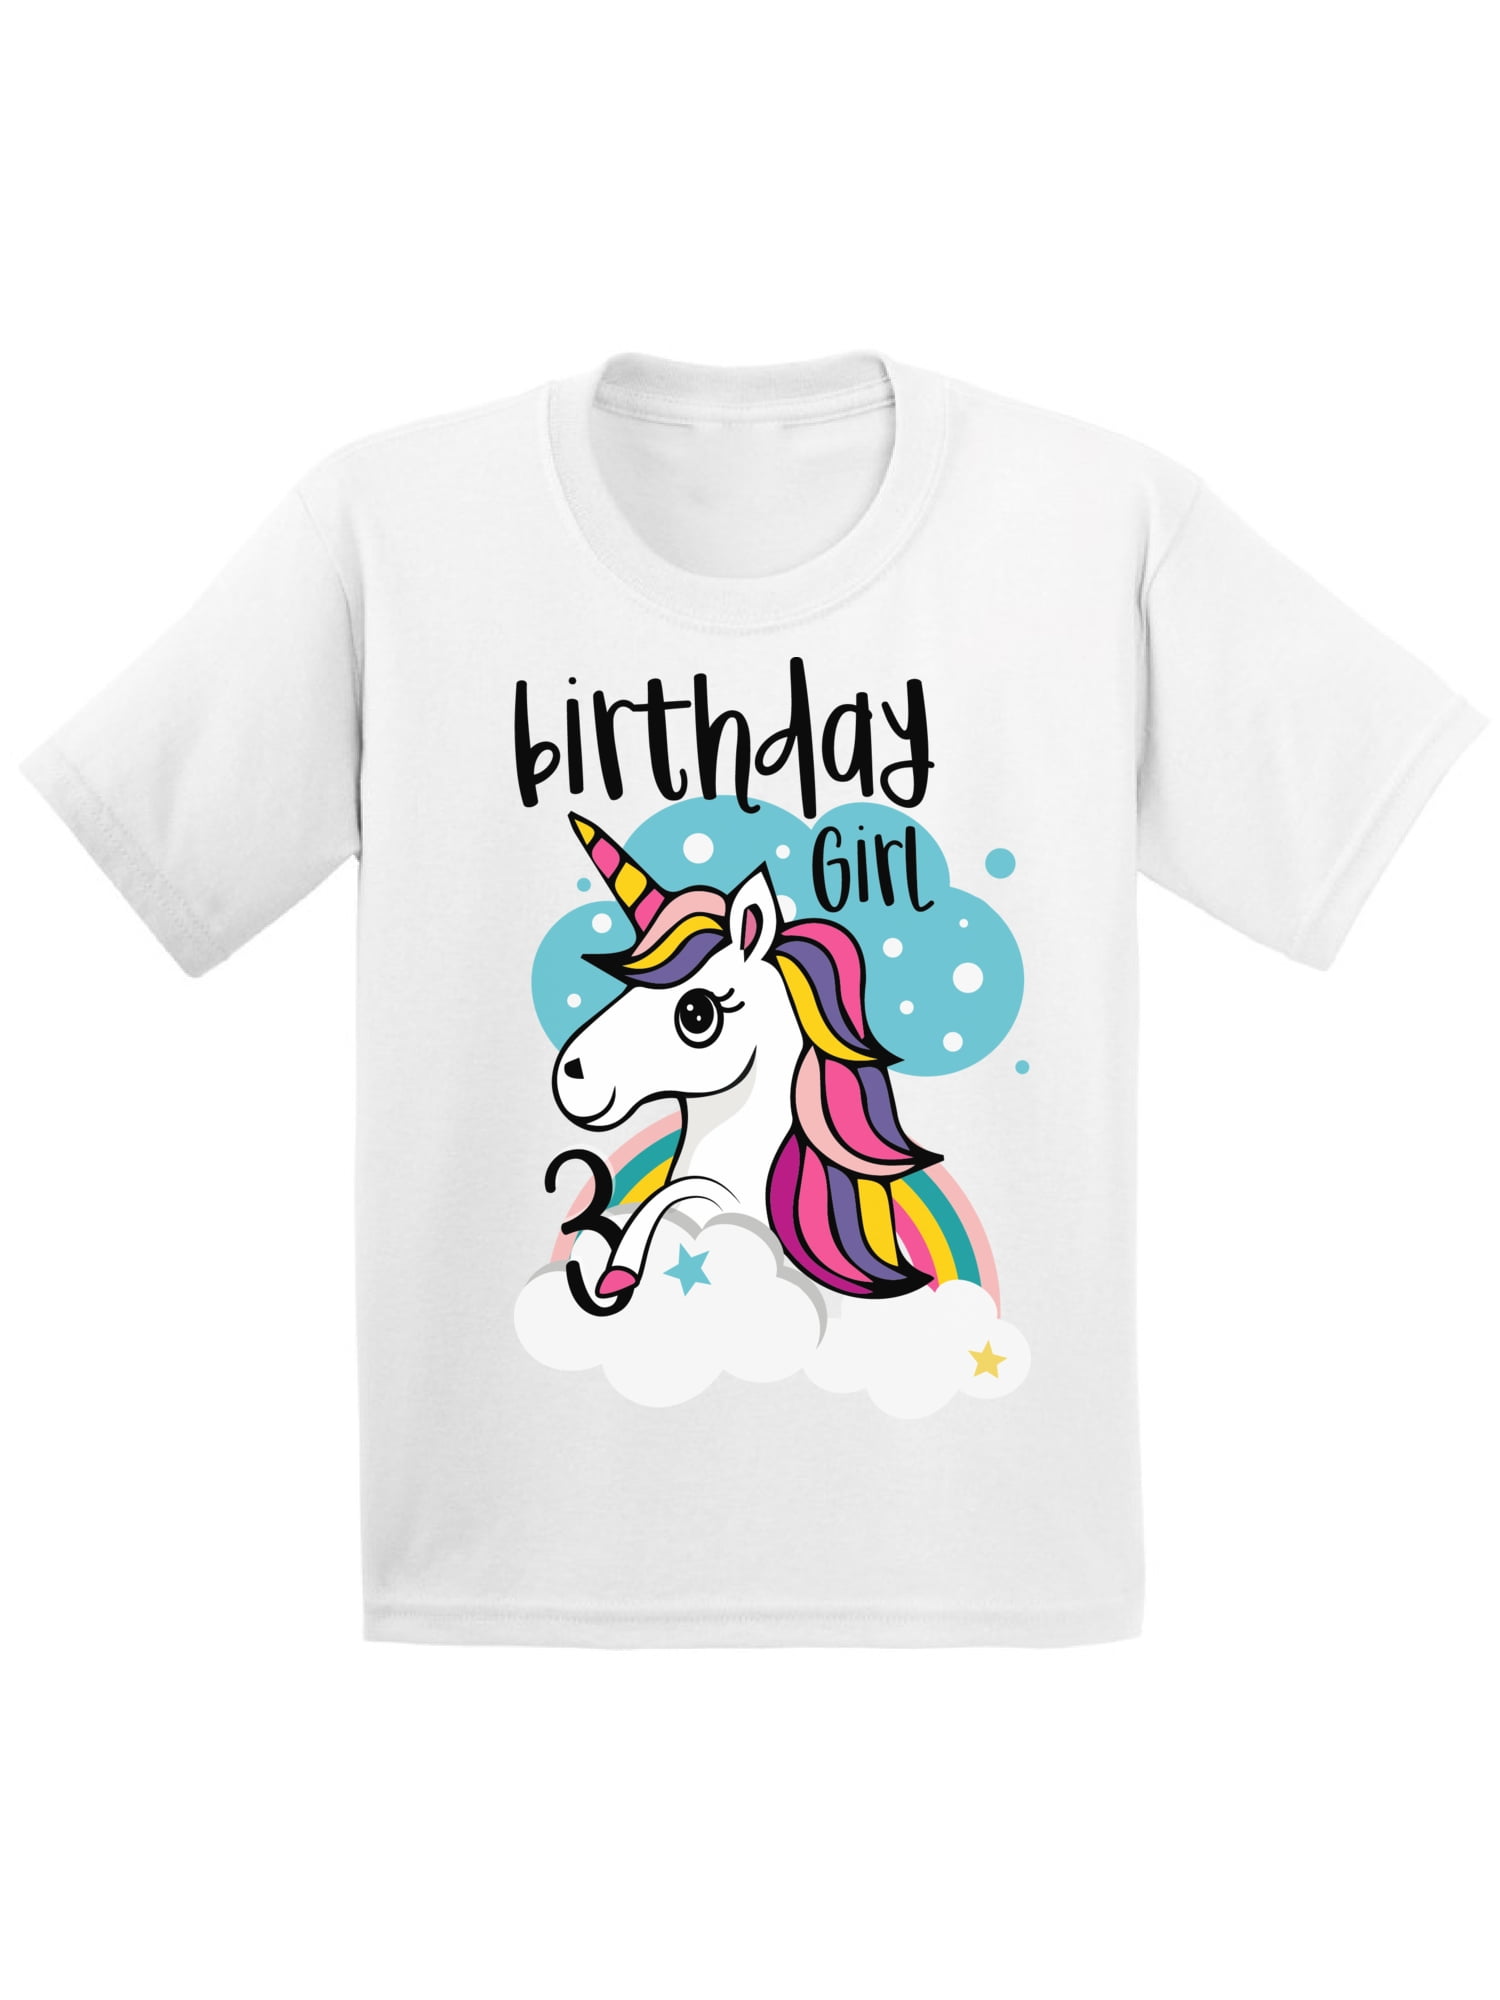 3rd Birthday Shirt Unicorn Birthday Girl Shirt Pink Glitter Shirt Unicorn Birthday shirt Unicorn Shirt Unicorn Party